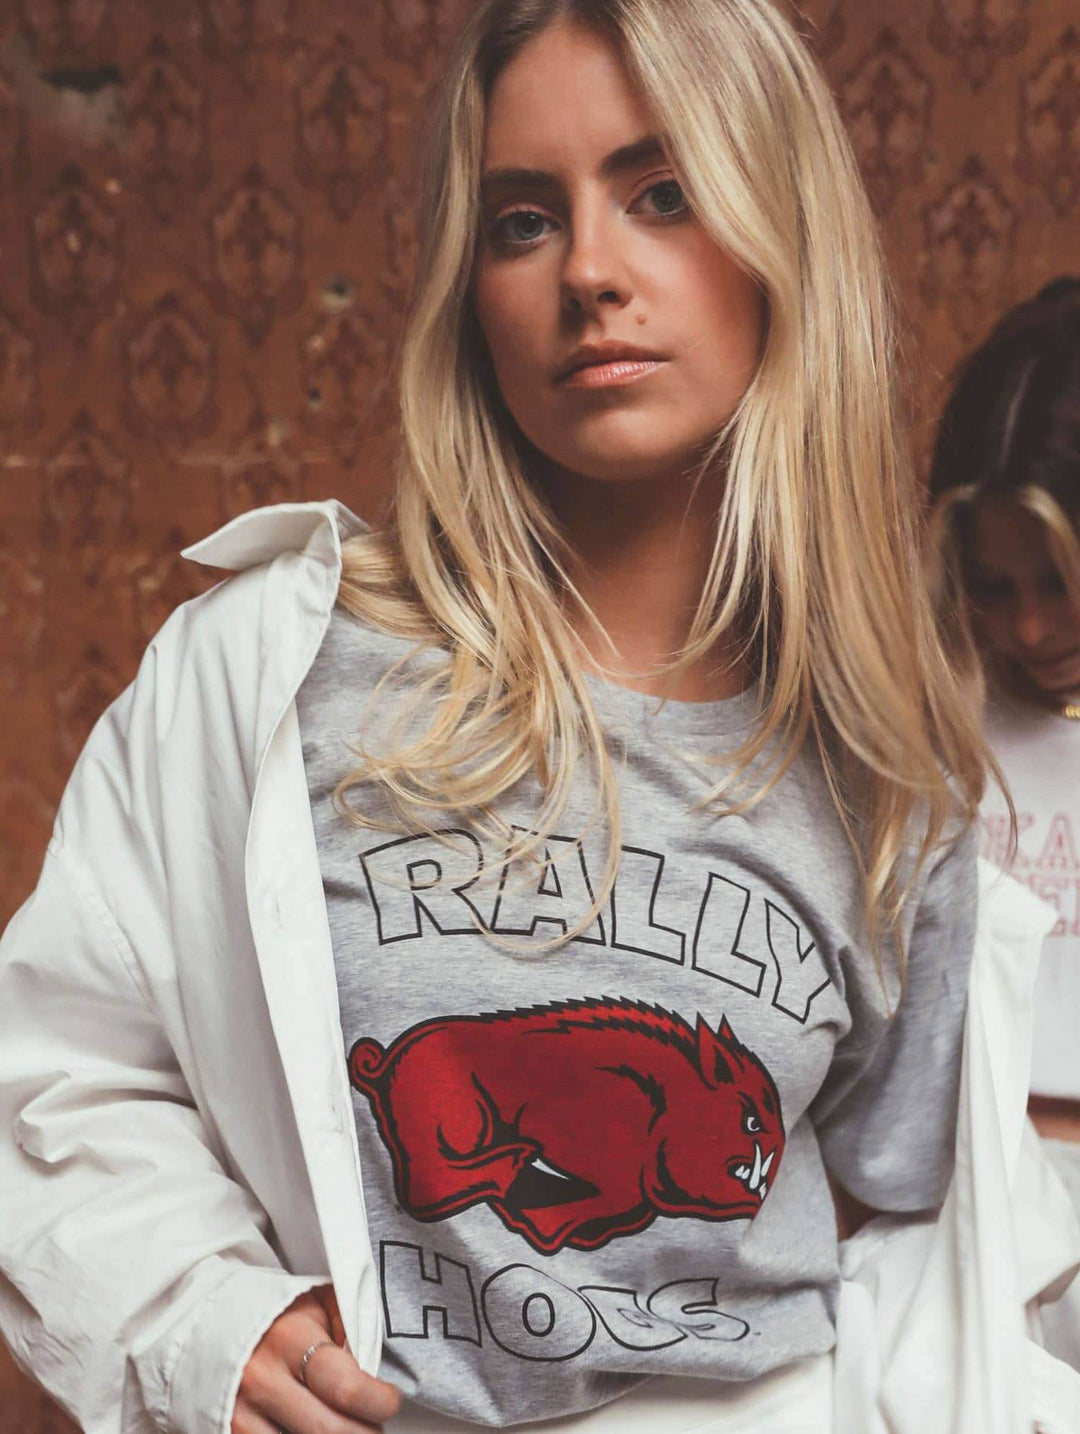 Arkansas Razorbacks Rally Hogs Graphic Tee - Shirts & Tops